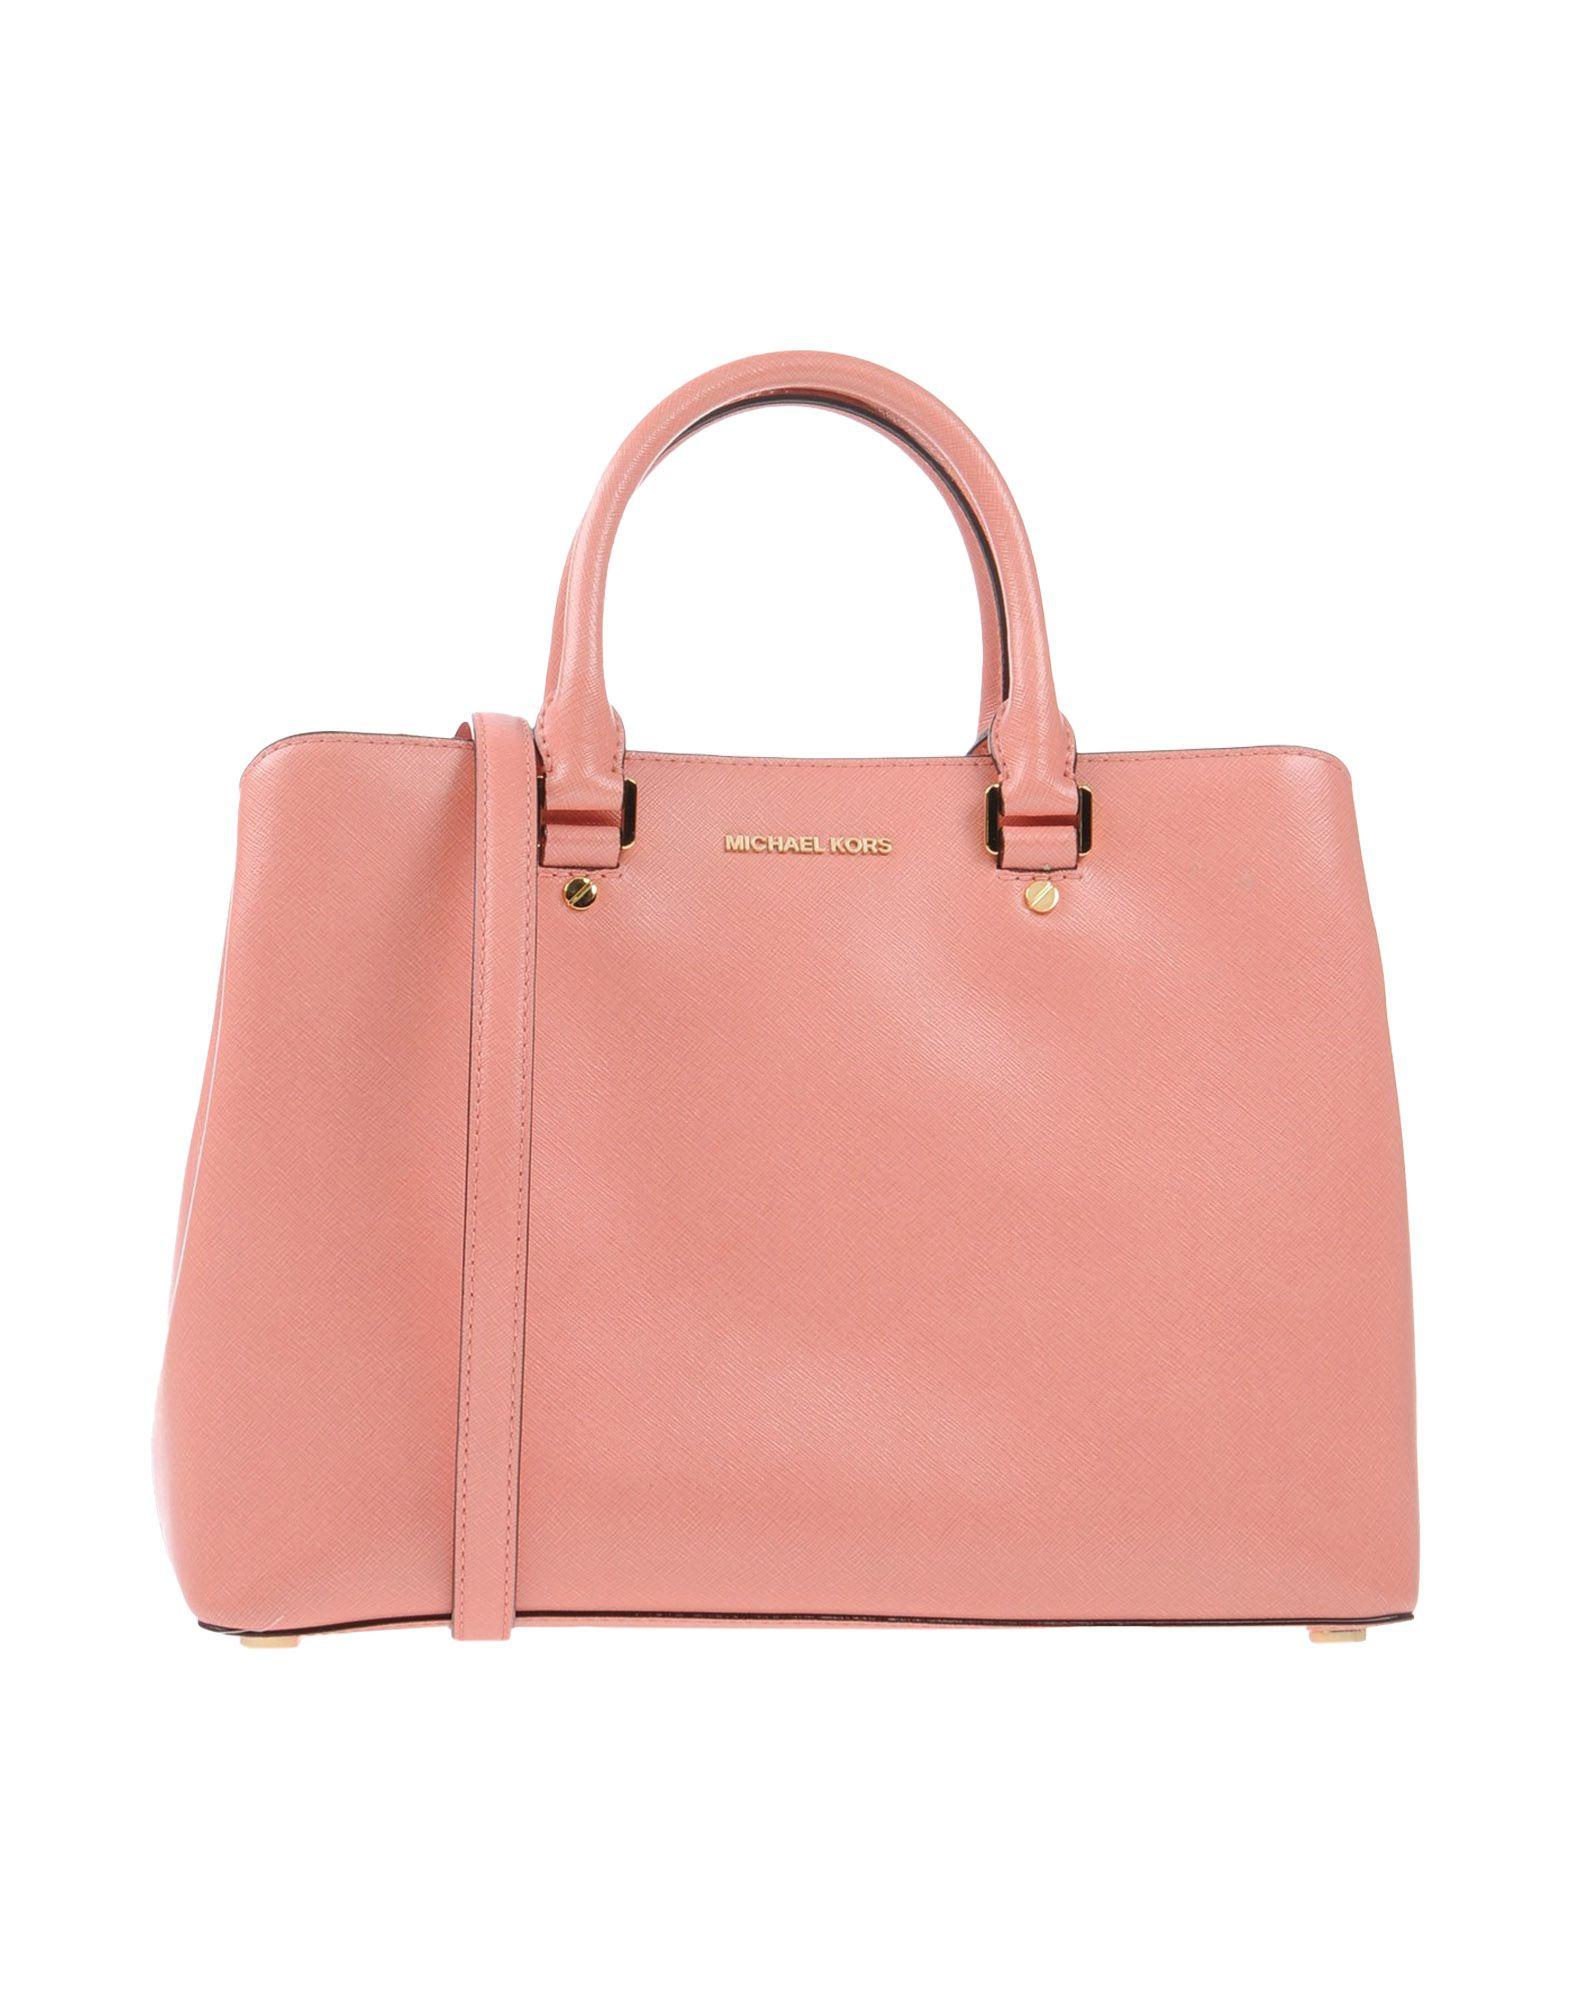 MICHAEL Michael Kors Leather Handbag in Salmon Pink (Pink) - Lyst